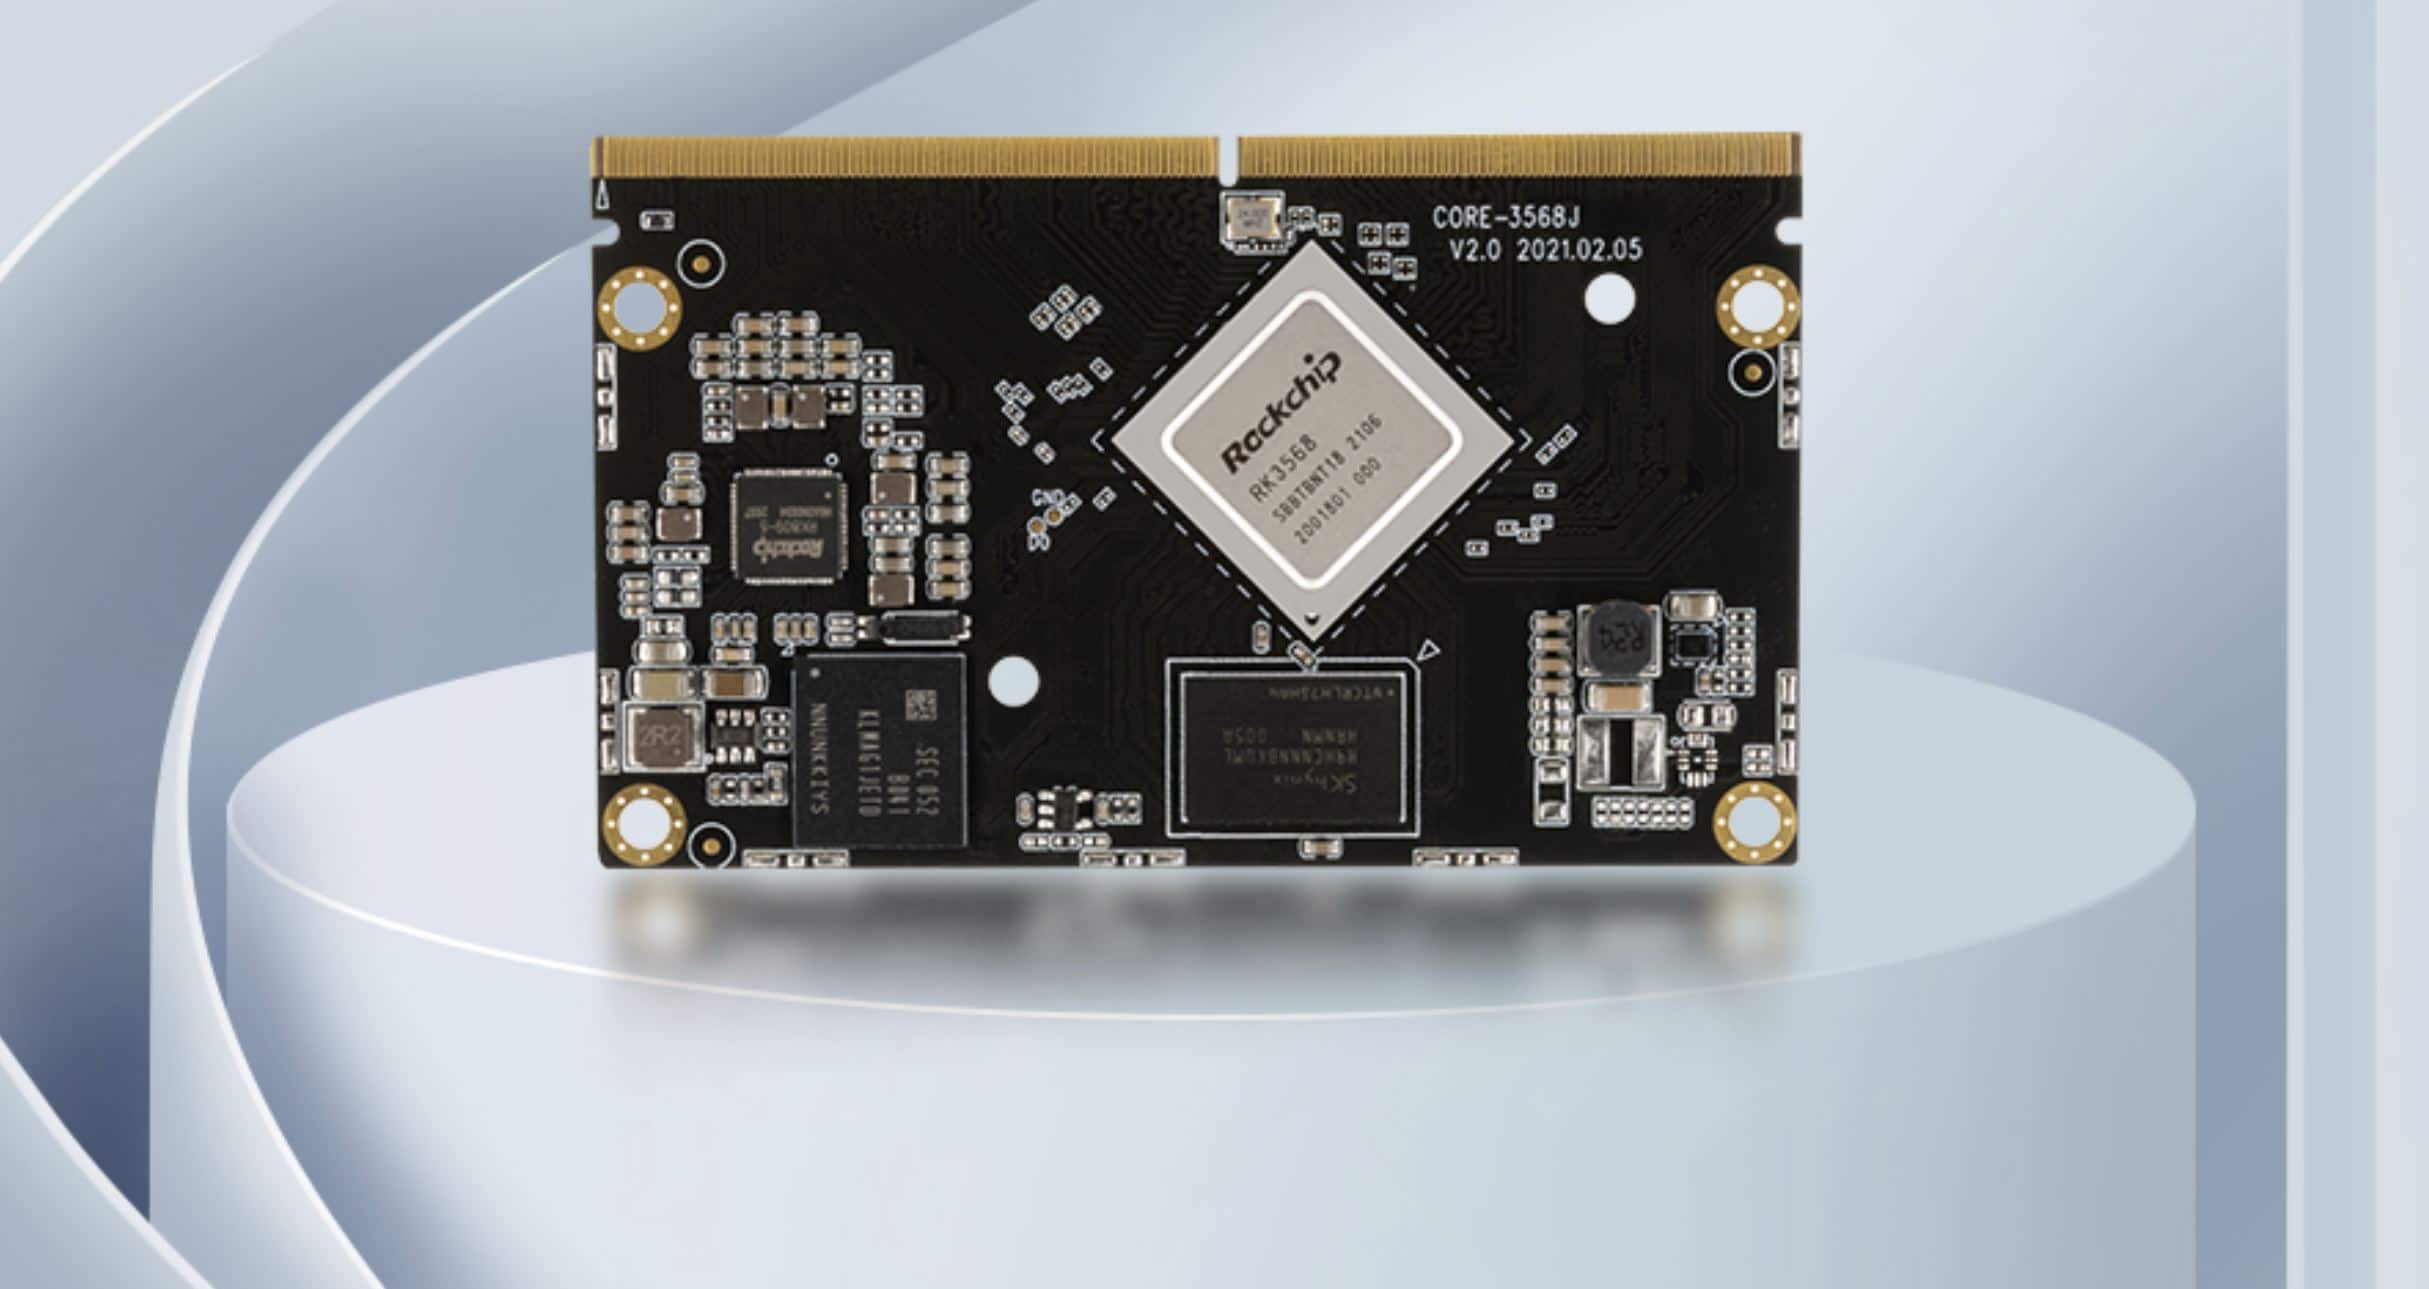 Firefly's New Core-3568J AI Core Board and AIO-3568J AI Mainboard